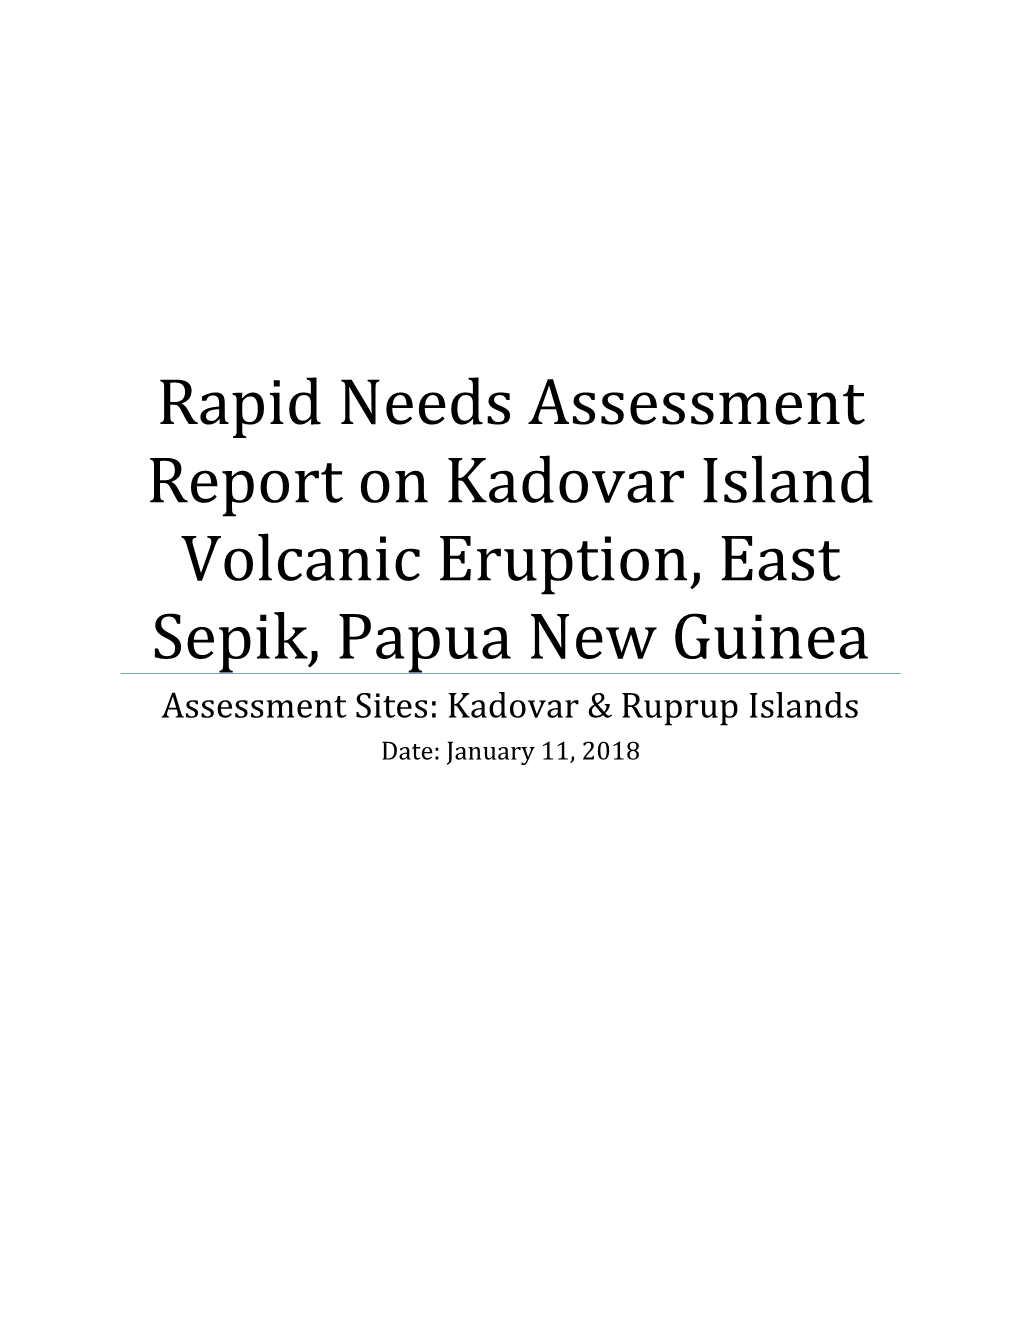 Rapid Needs Assessment Report on Kadovar Island Volcanic Eruption, East Sepik, Papua New Guinea Assessment Sites: Kadovar & Ruprup Islands Date: January 11, 2018